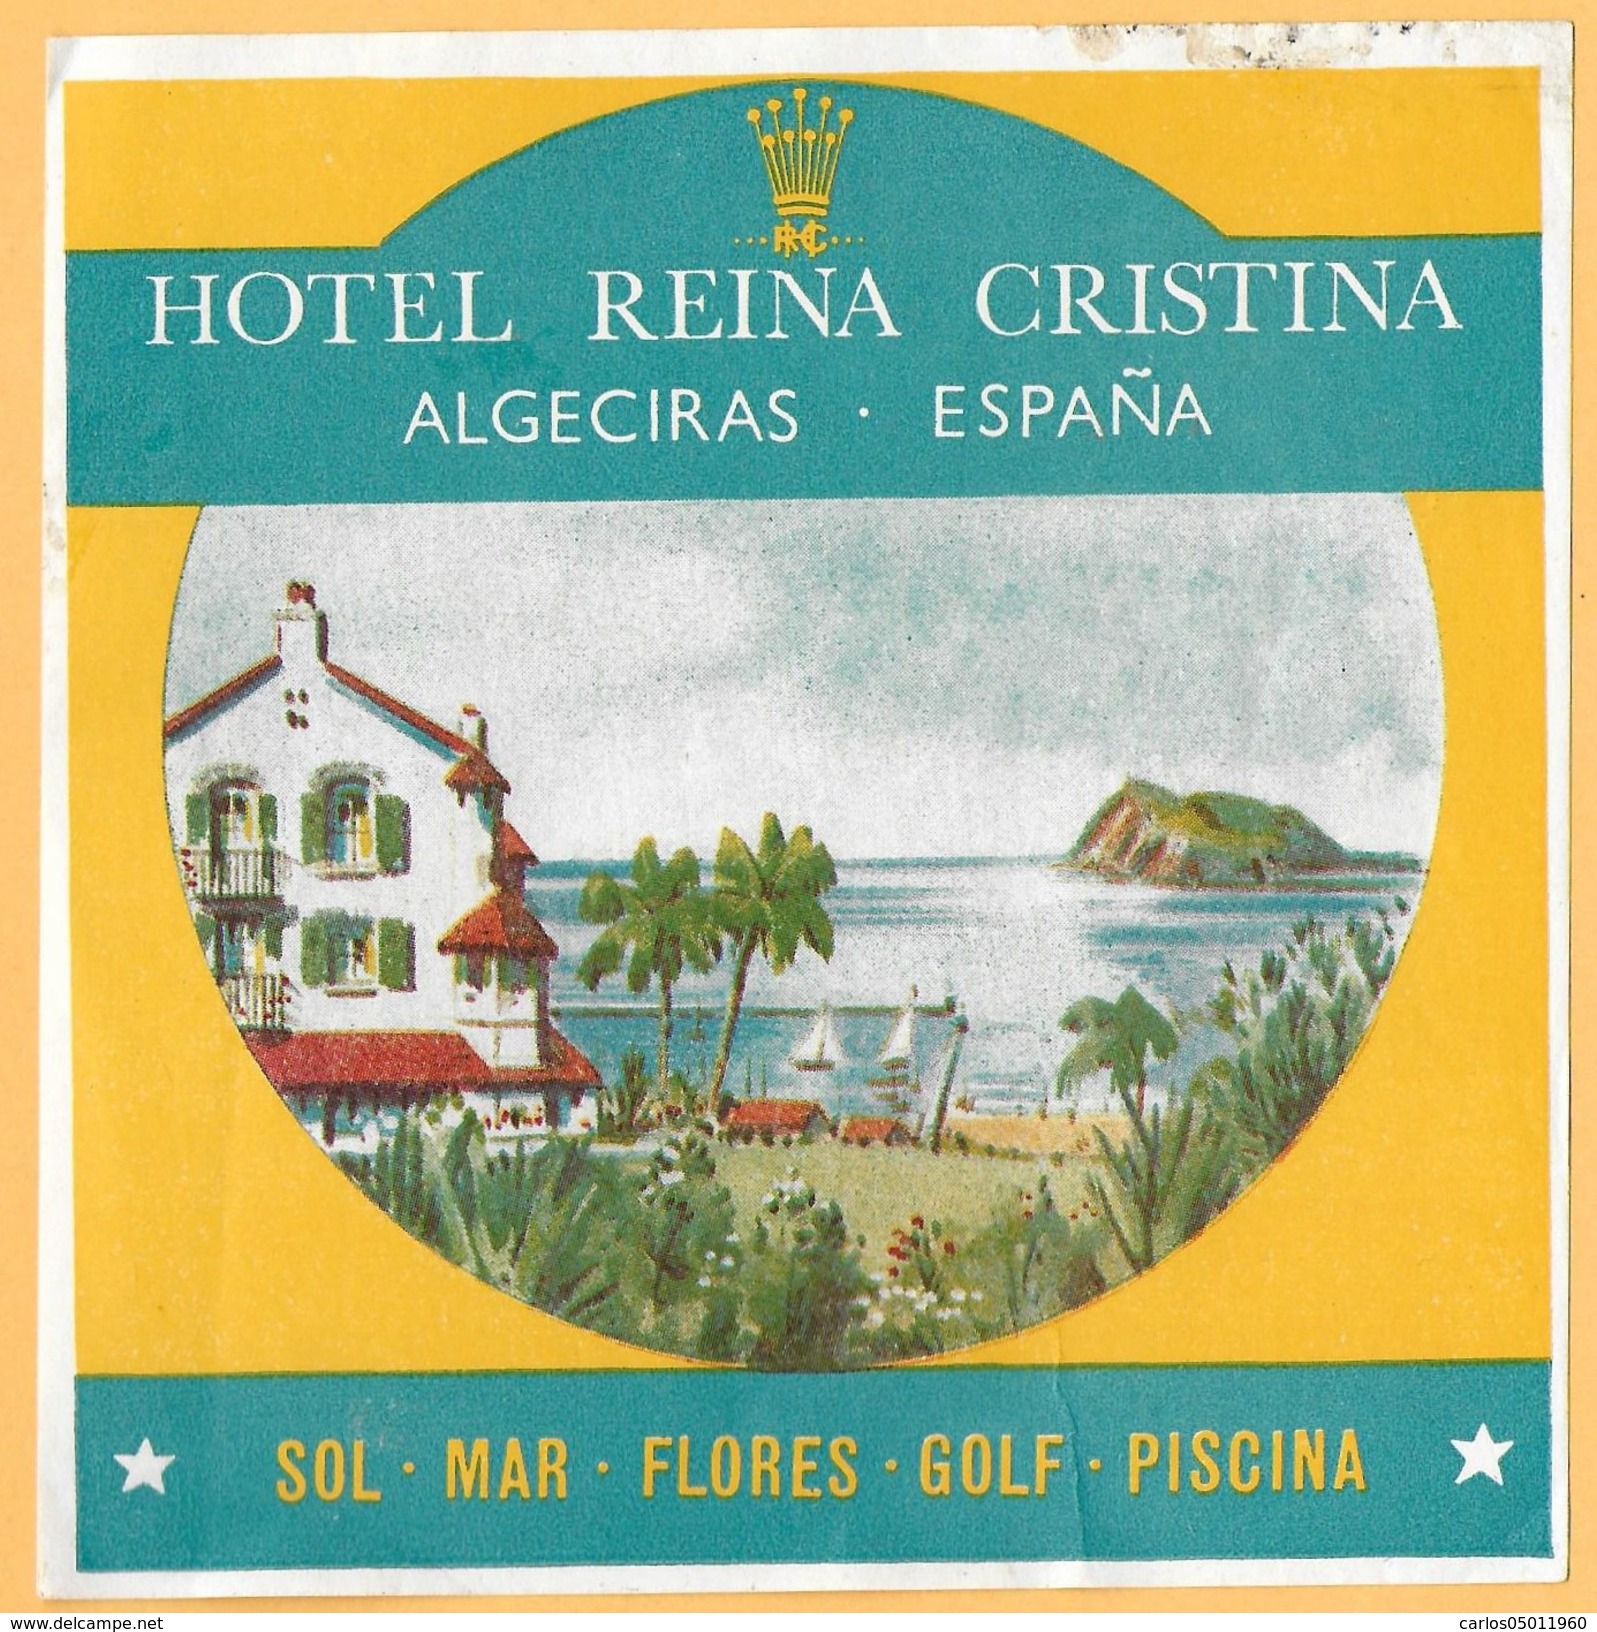 HOTEL LABELS / HOTEL REINA CRISTINA / ALGECIRAS / SPAIN / 01 - Hotel Labels